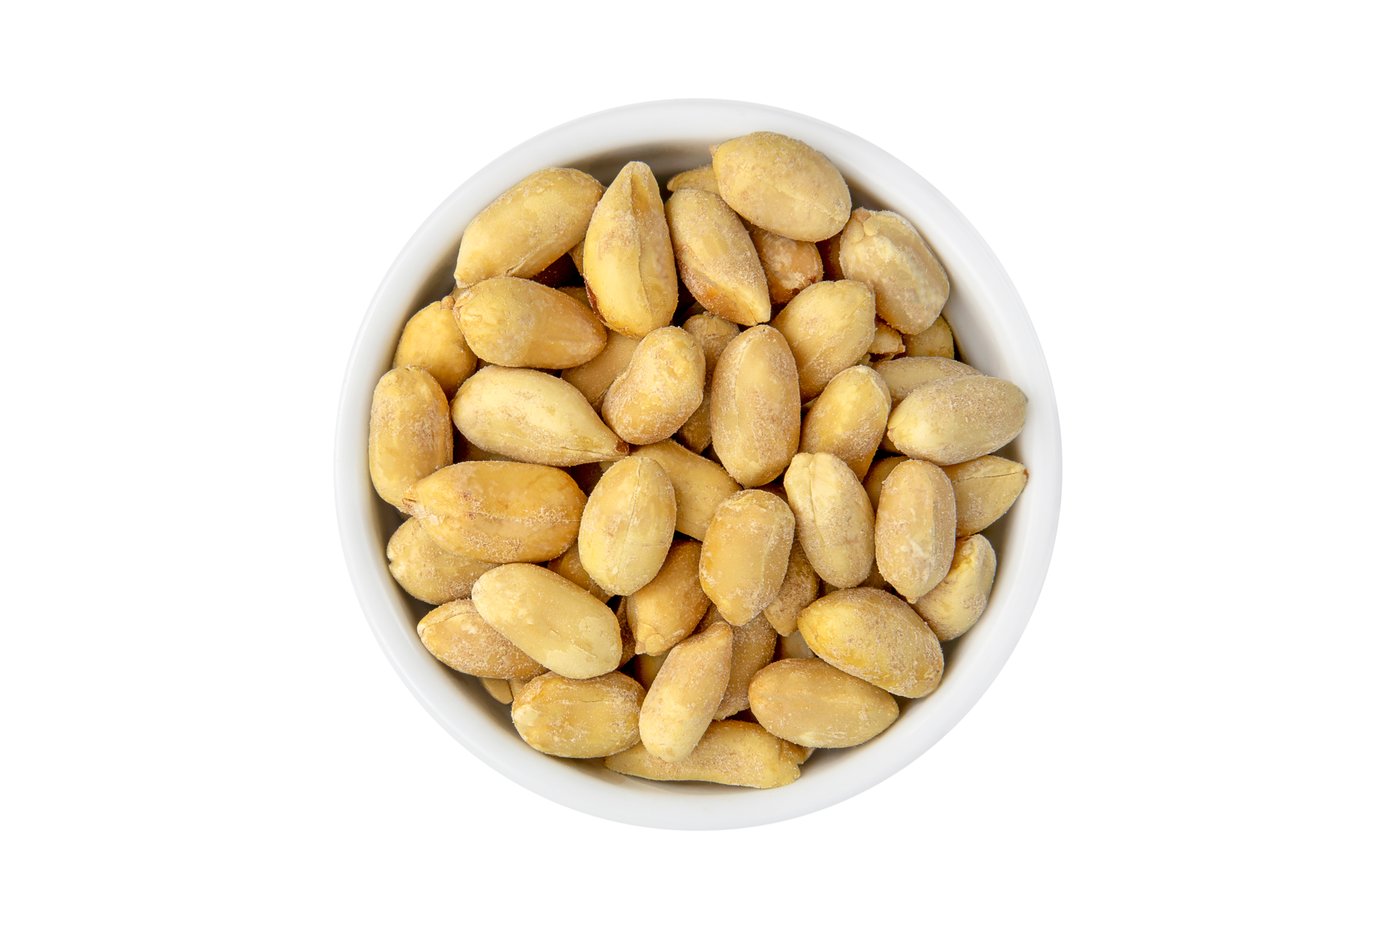 Roasted Super Jumbo Virginia Peanuts (Salted, No Shell) photo